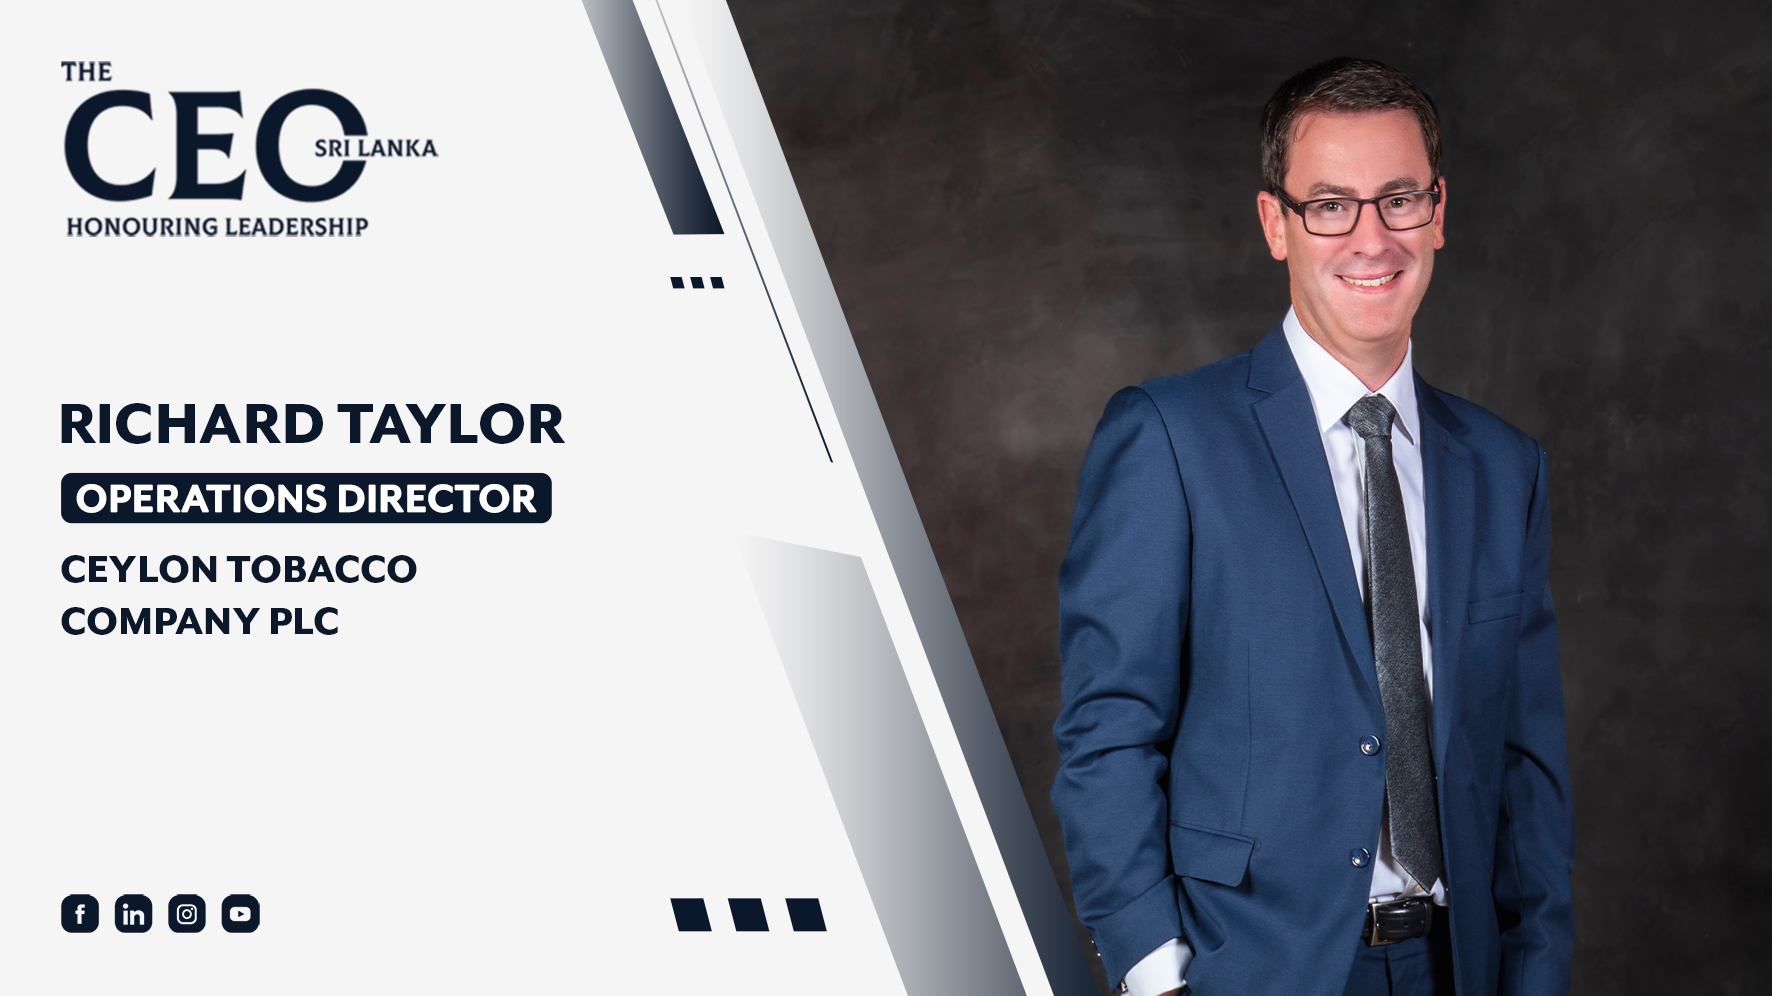 Richard Taylor – Operations Director at Ceylon Tobacco Company (CTC)